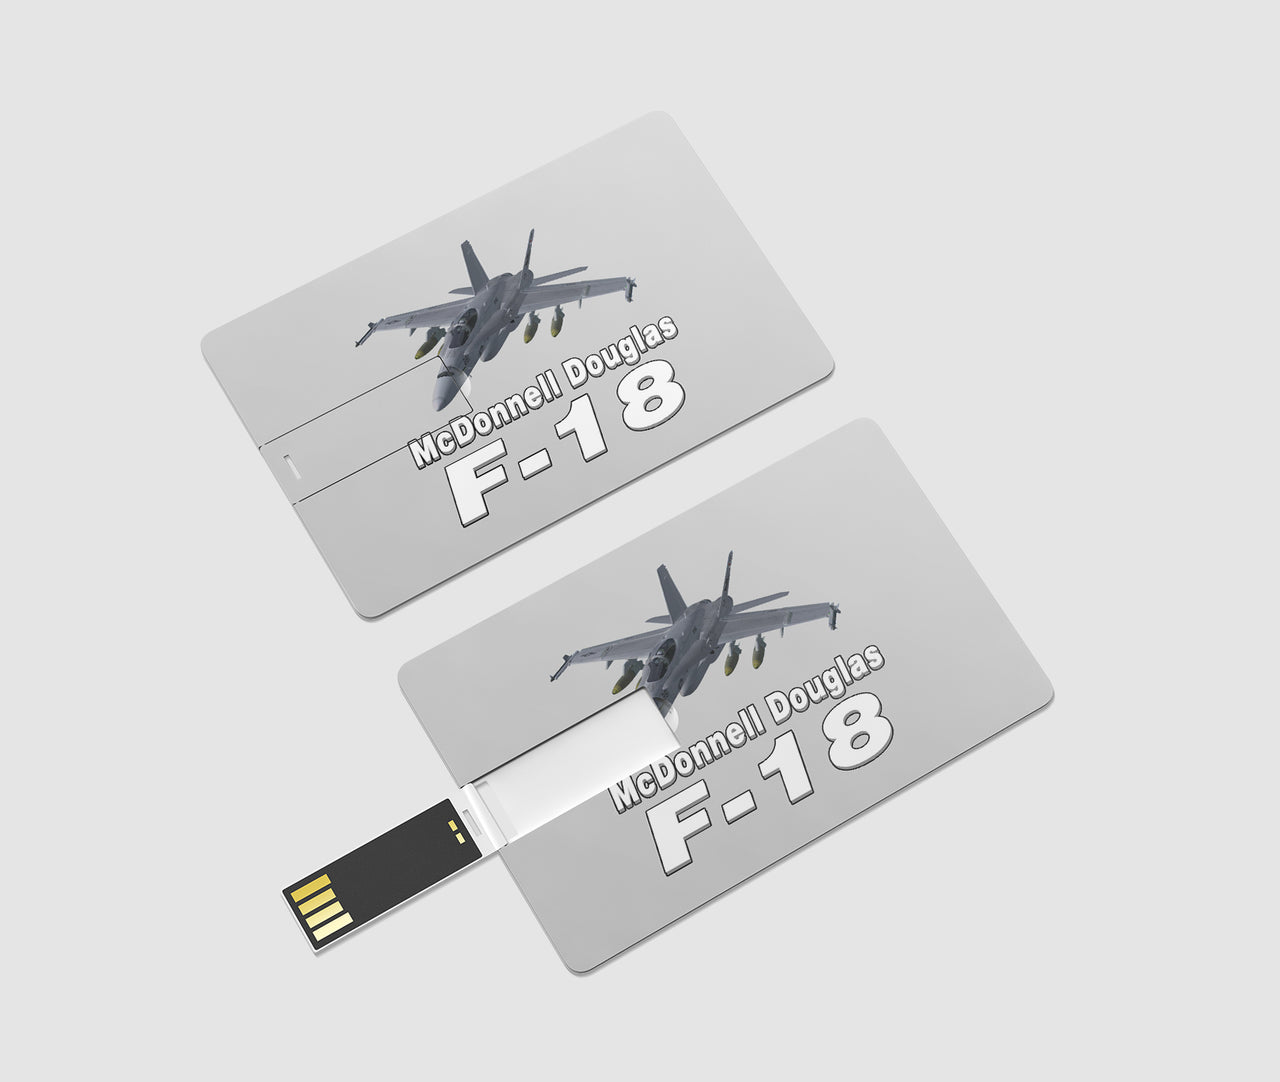 The McDonnell Douglas F18 Designed USB Cards